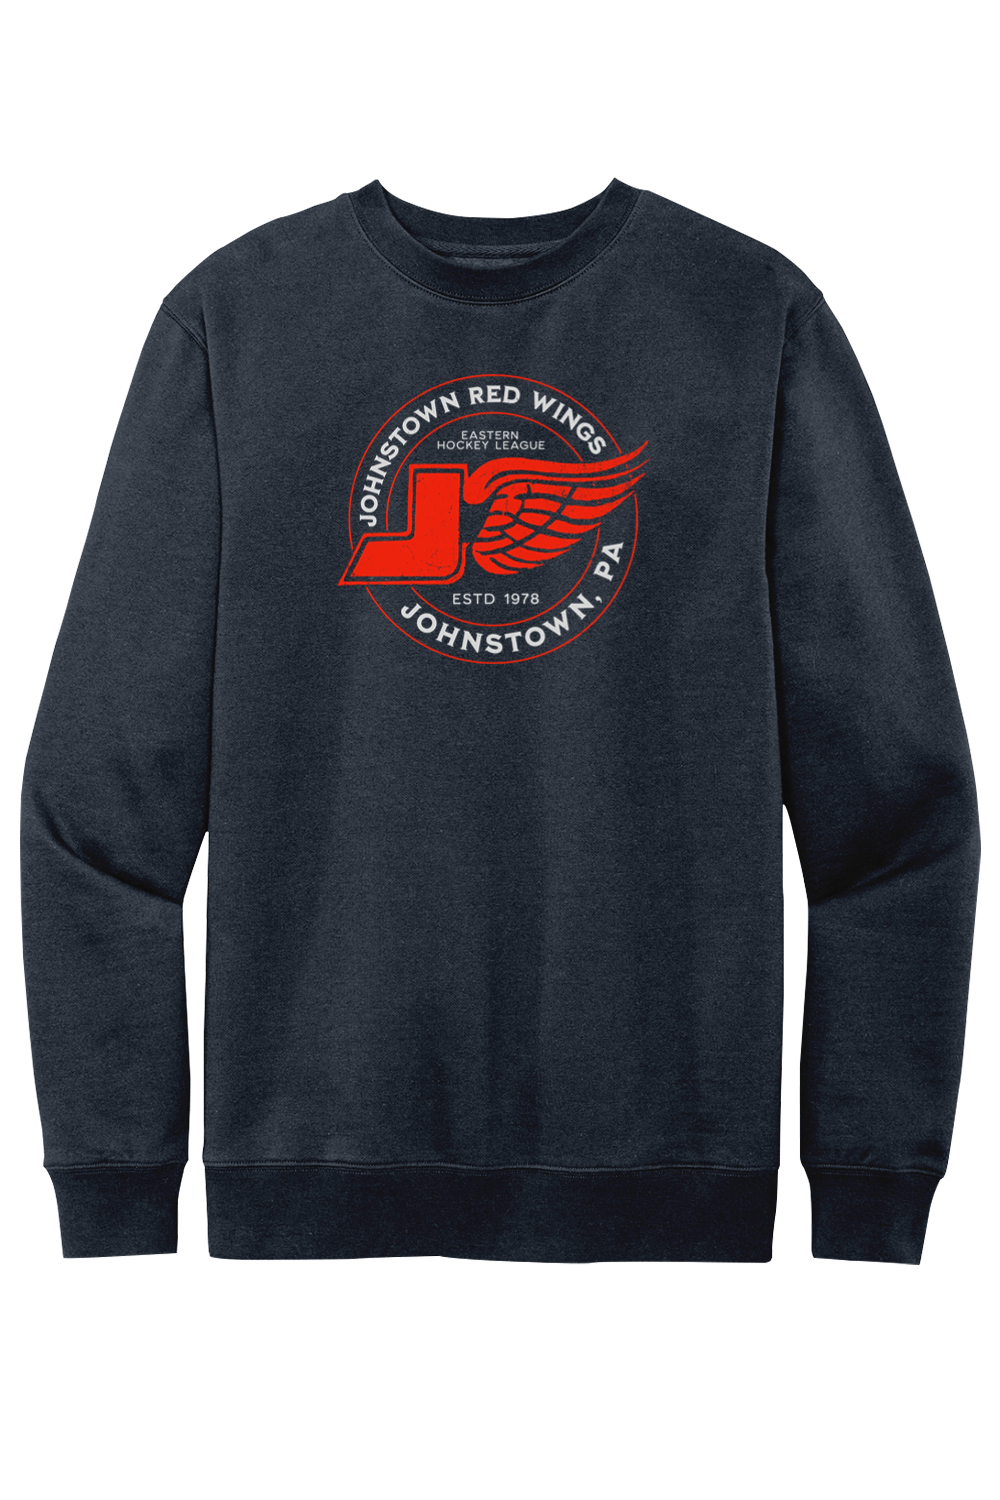 Johnstown Red Wings Hockey - Fleece Crewneck Sweatshirt